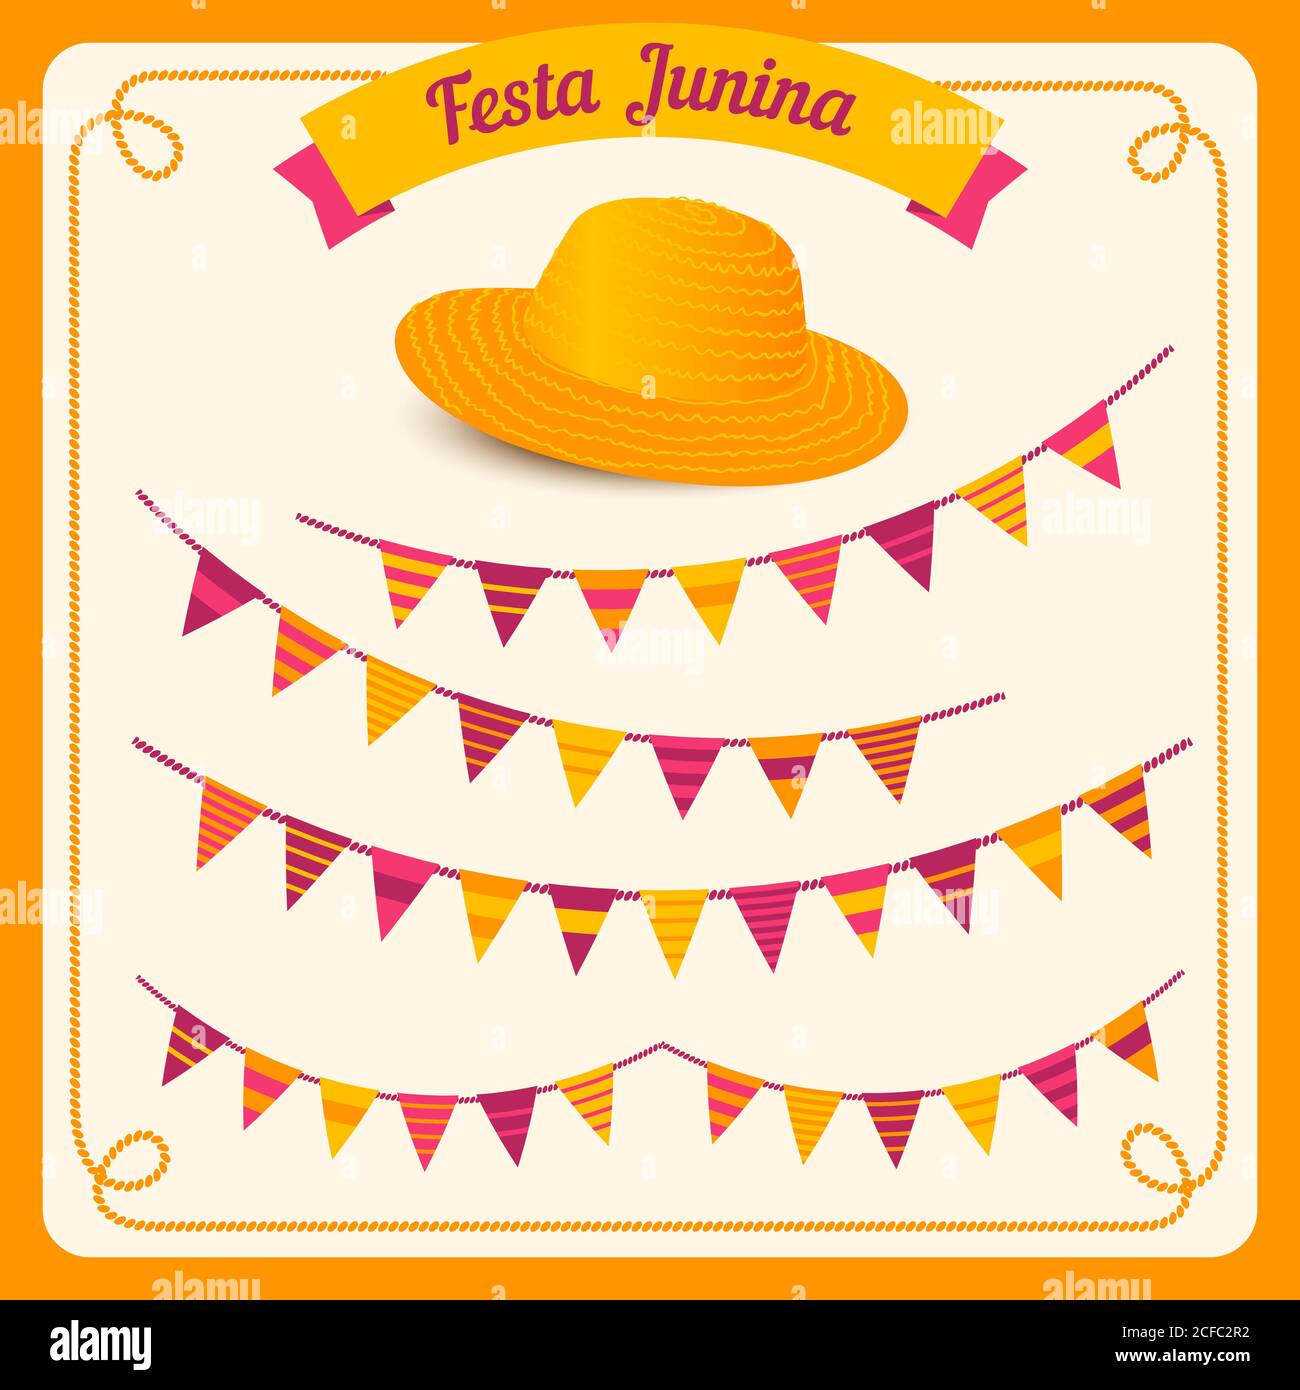 Festa Junina Illustration - traditionelle Brasilien juni Festival Party - Mittsommerurlaub. Vektorgrafik. Stock Vektor